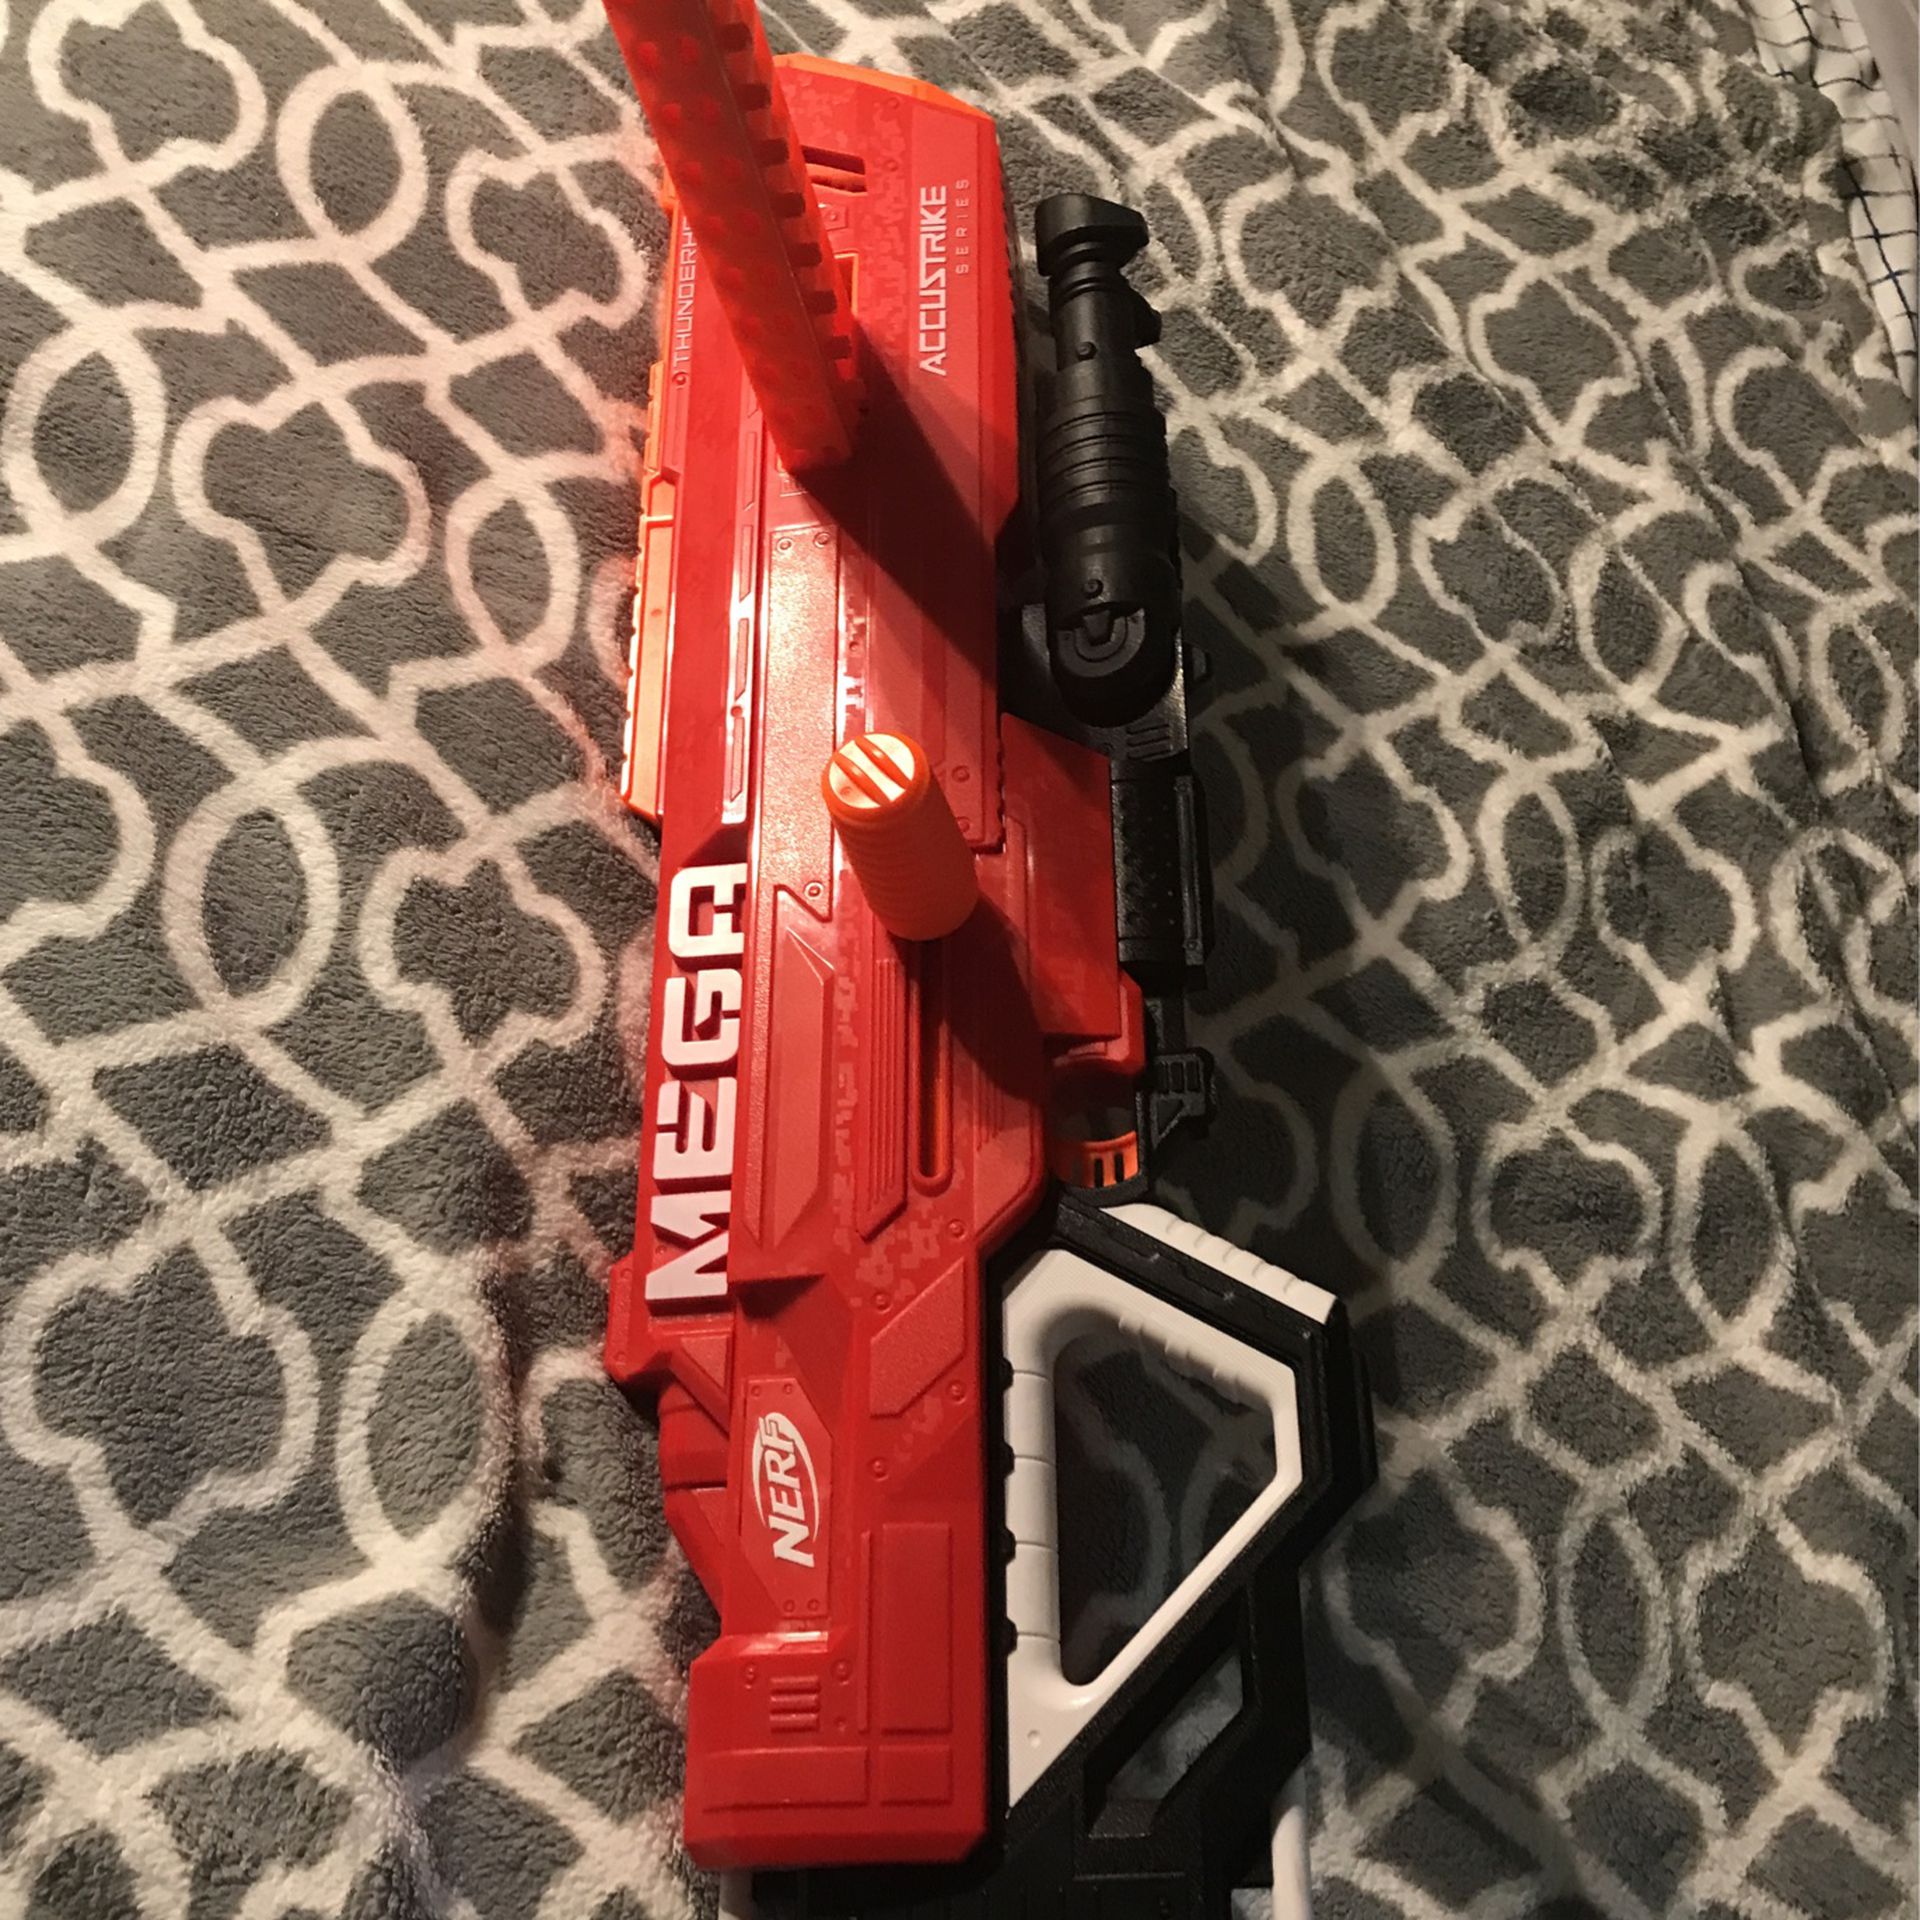 MEGA Nerf Gun